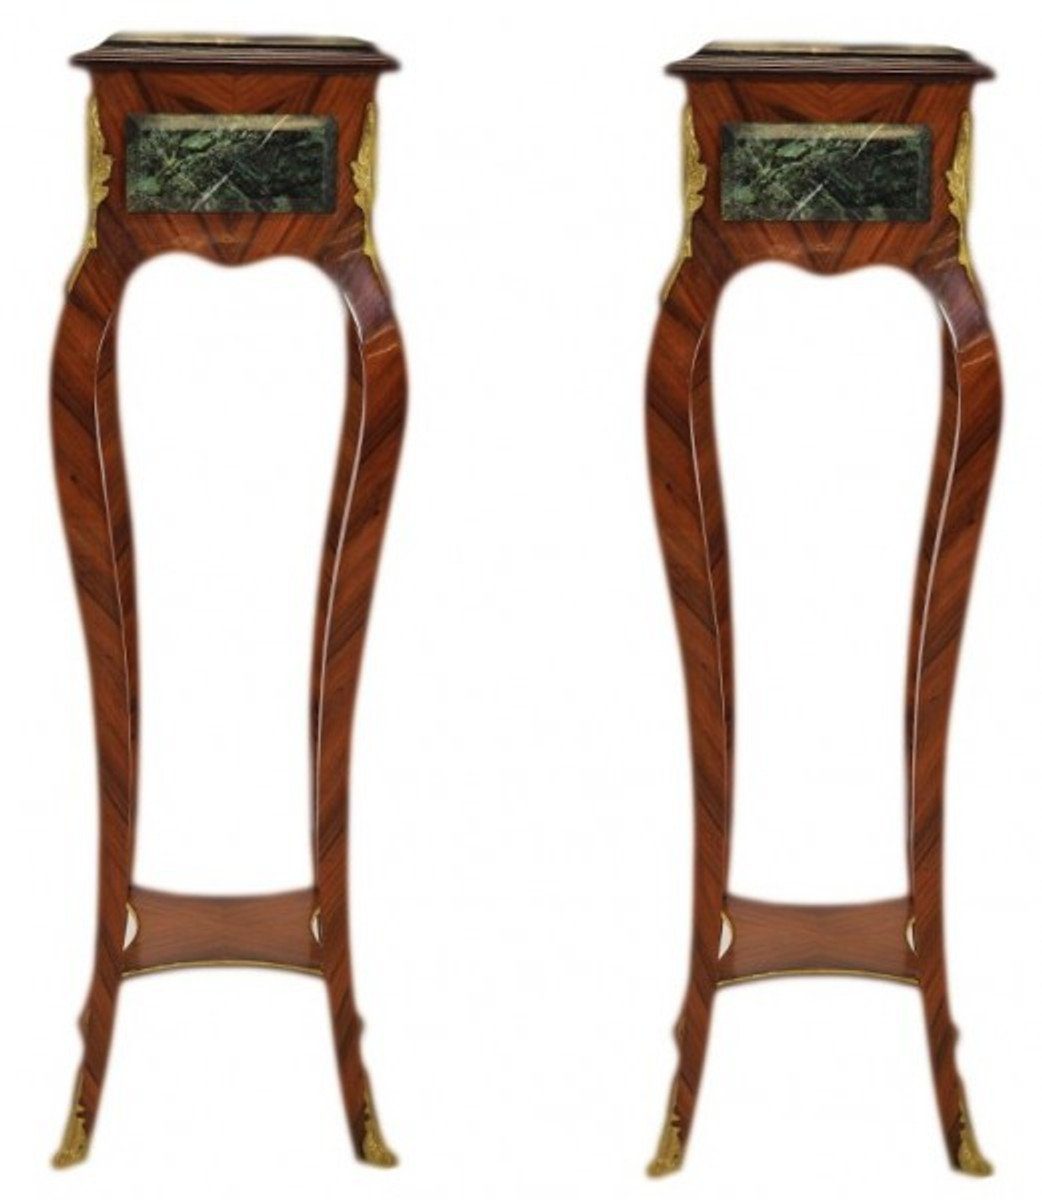 Casa Padrino Beistelltisch Barock Säulen Set mit Marmorbesatz Mahagoni Braun - Beistelltisch Set - Säule (2 Stk)